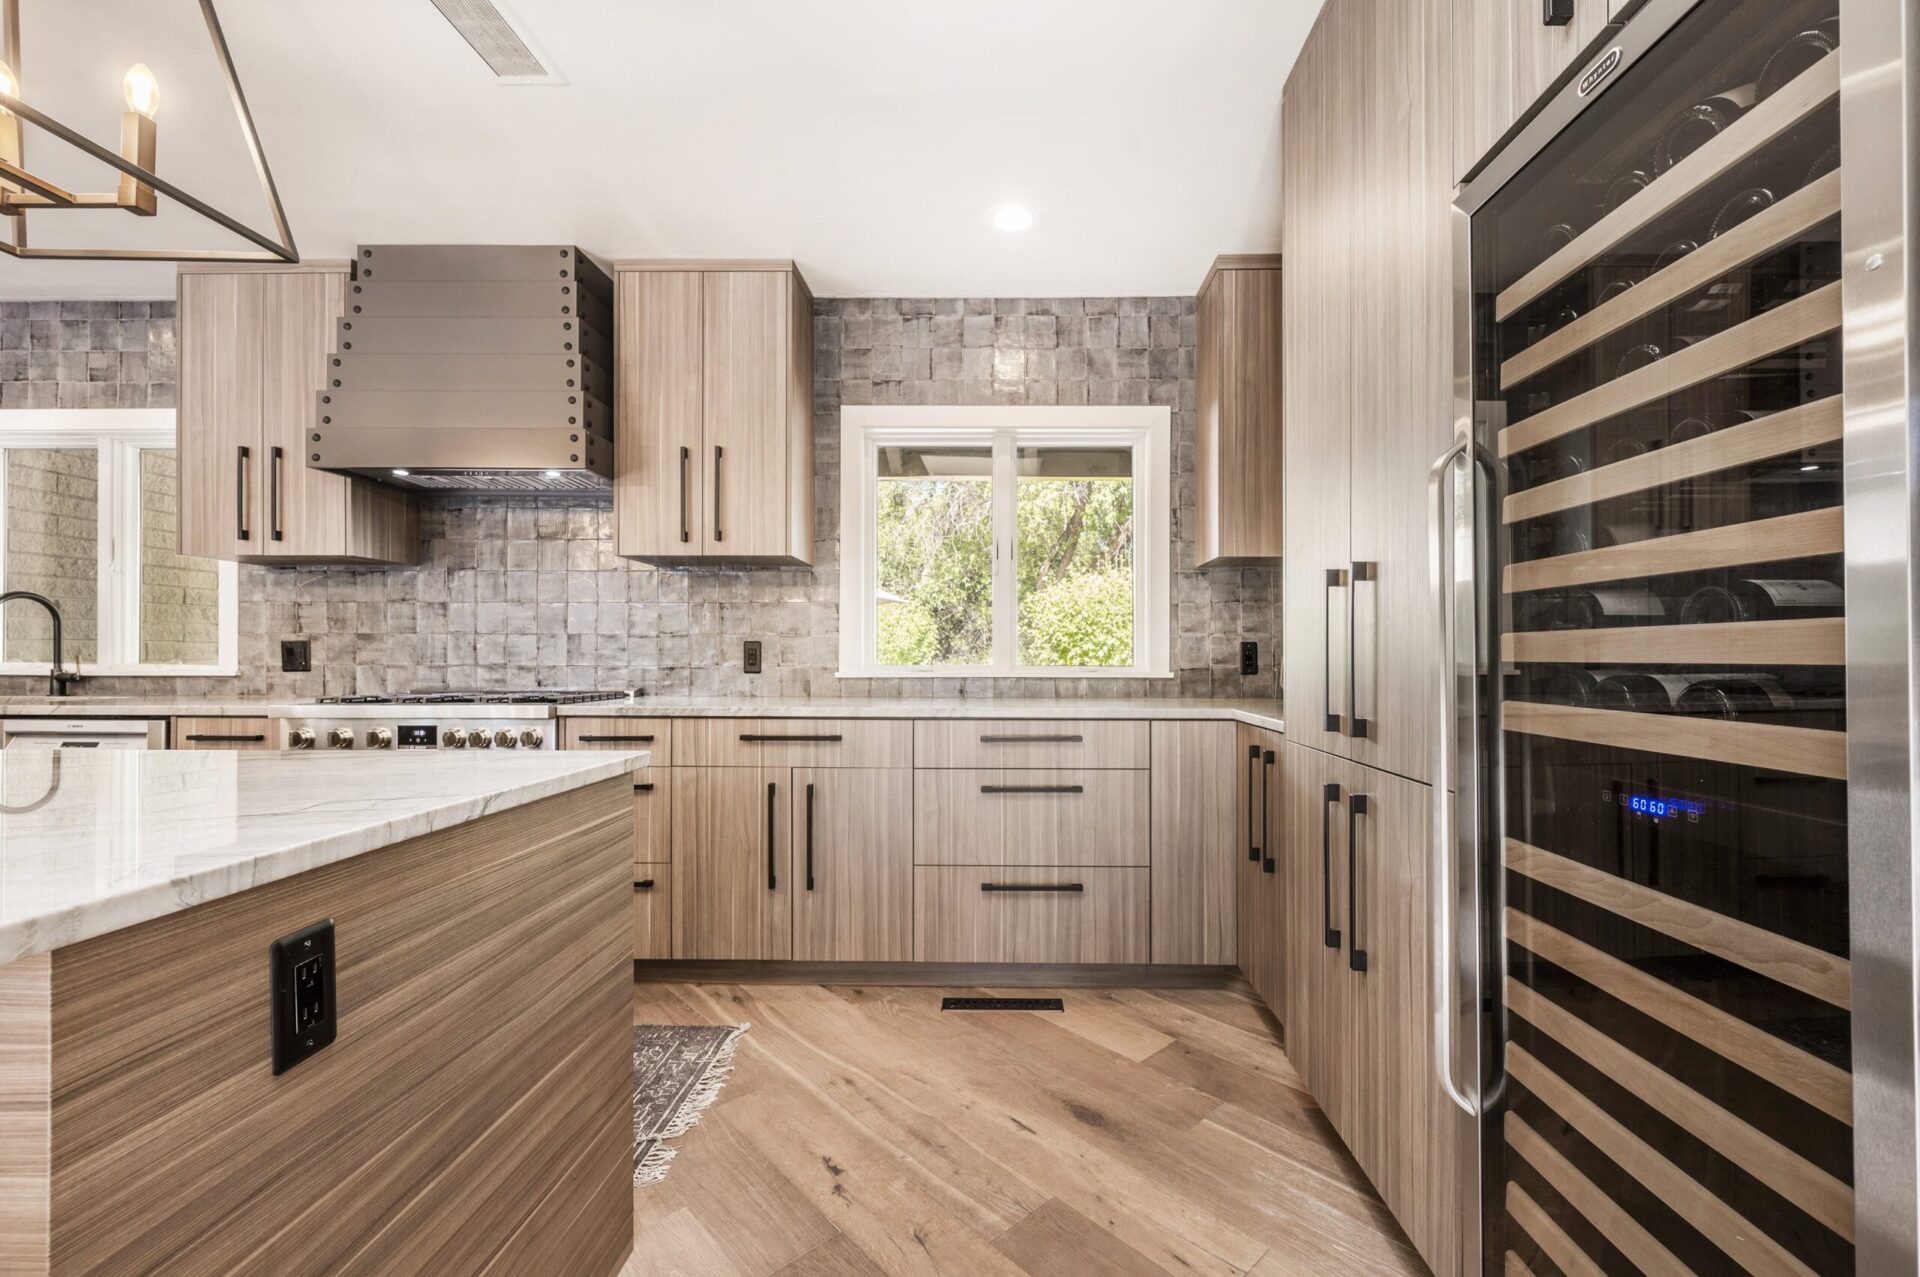 Utah Custom kitchen cabinets sleek flat doors | Trusted quality for Utah homeowners.